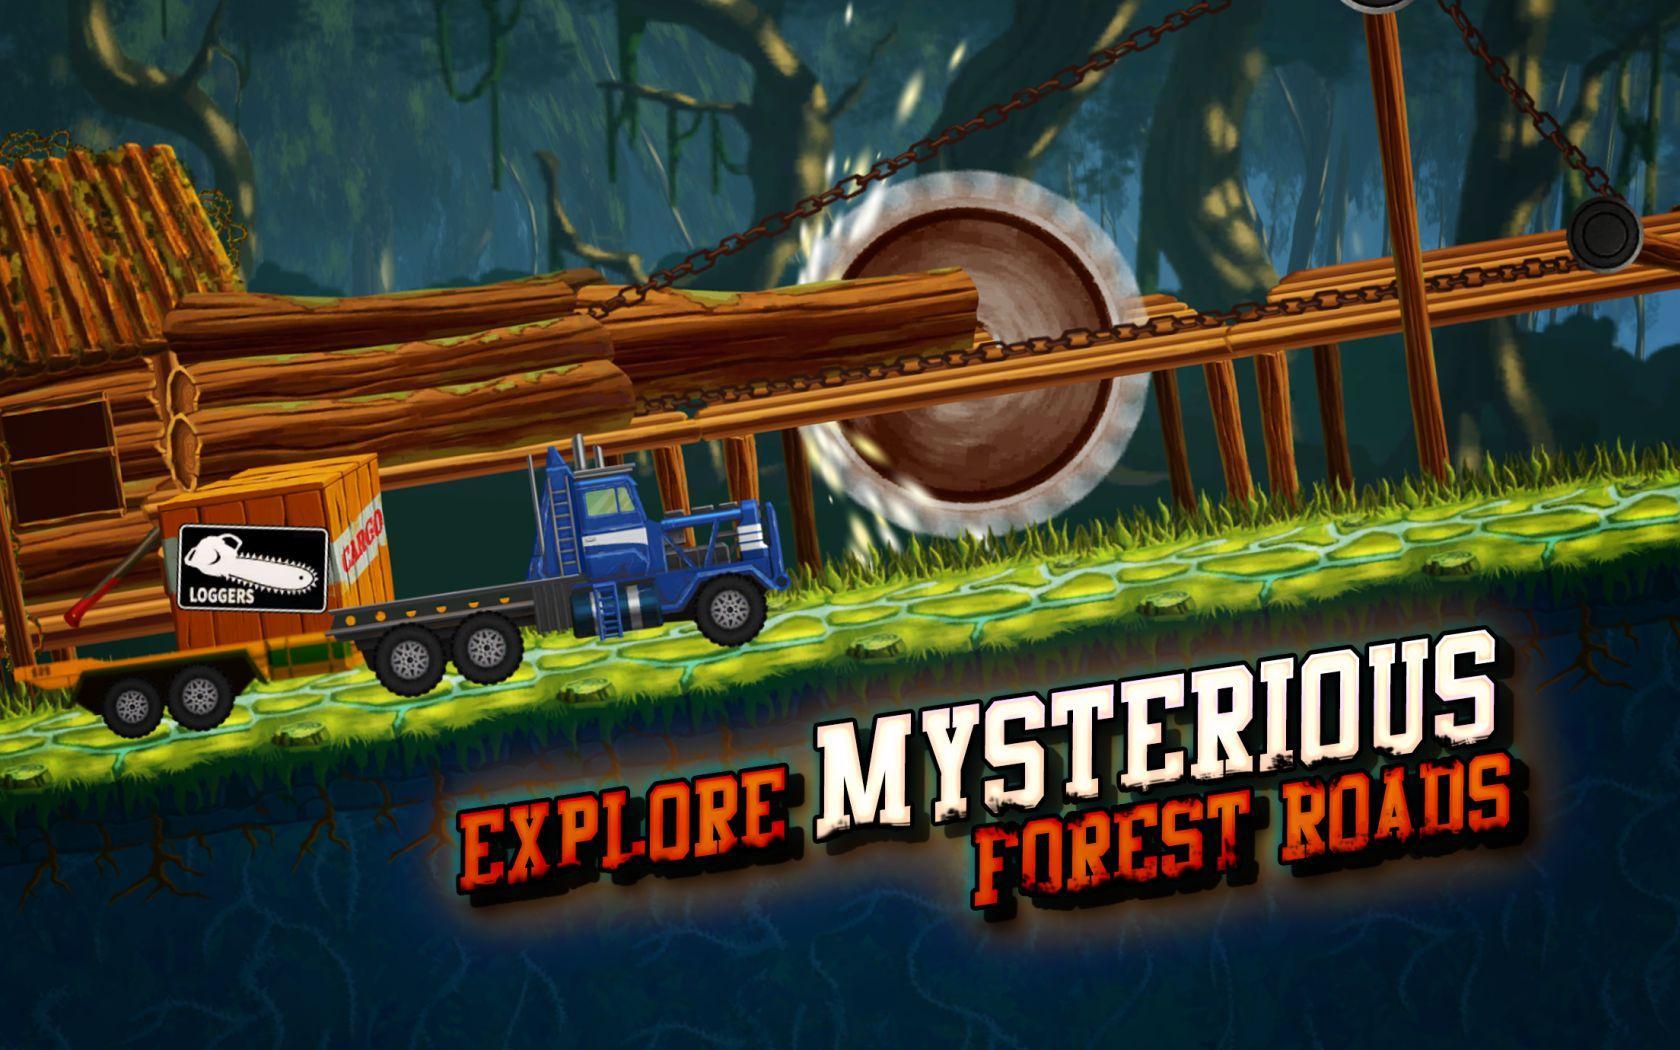 Forest Truck Simulator: Offroad & Log Truck Gamesのキャプチャ